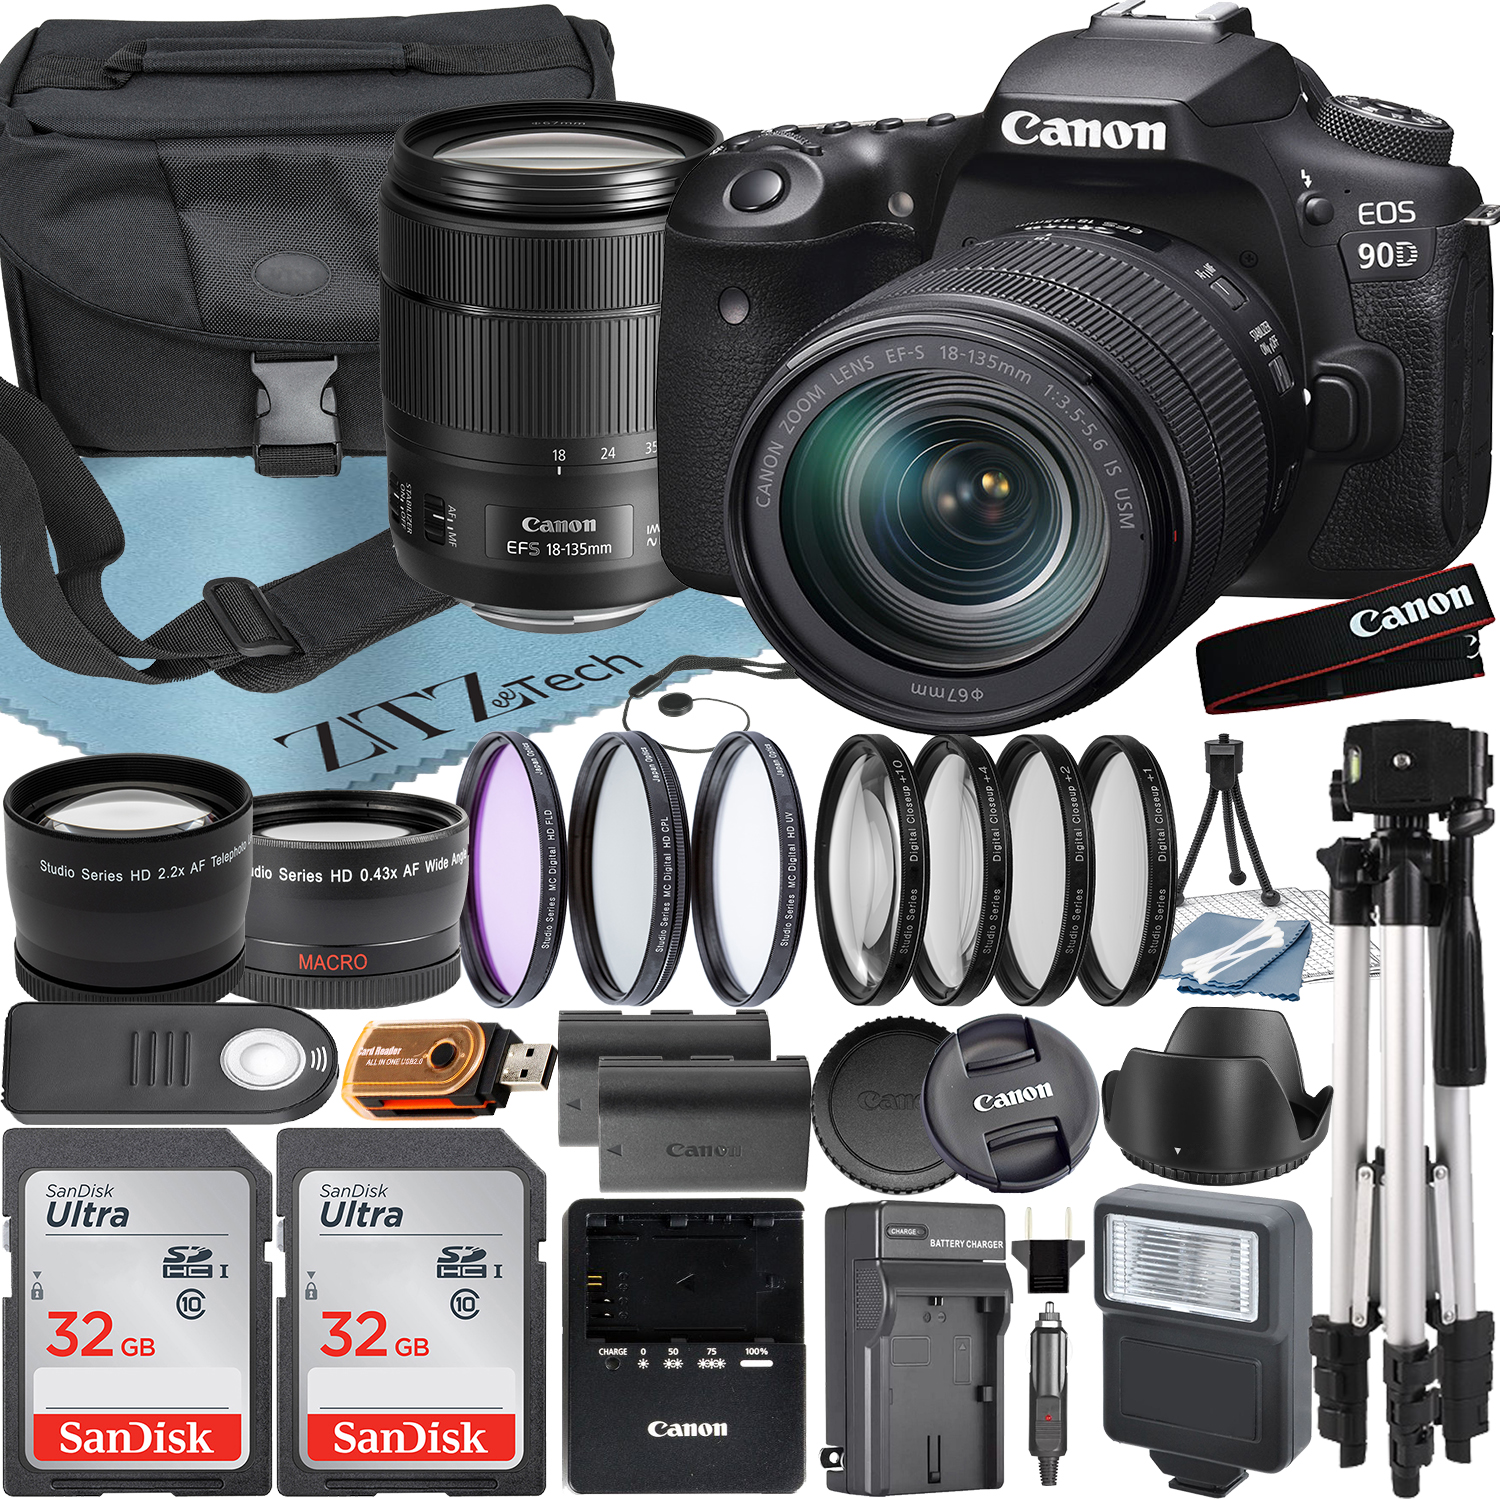 Canon EOS 90D DSLR Camera with 18-135mm IS USM Lens + 2 Pieces SanDisk 32GB Card + Case + Telephoto + Tripod + ZeeTech Accessory Bundle